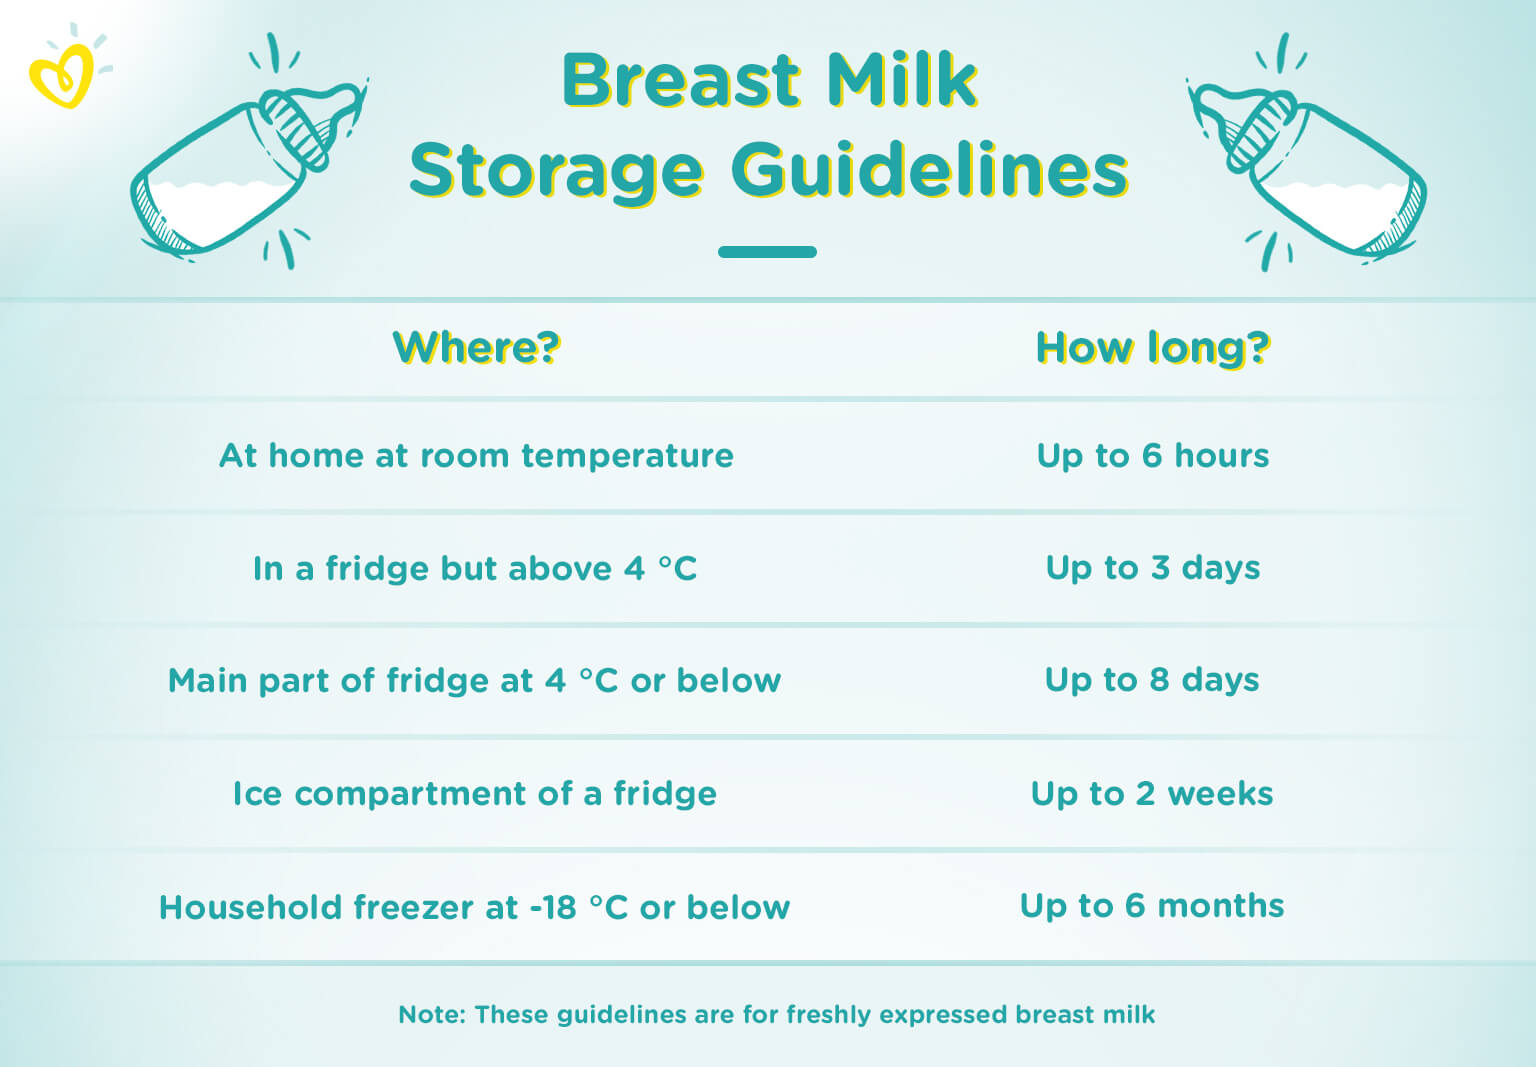 https://images.ctfassets.net/3shtzlb7cz90/1qXV1QVJUK9MslsAtQoGuU/8717d153036c6554942de88ea1456156/Breast_milk_storage_time_guidelines_UK_1536.jpeg